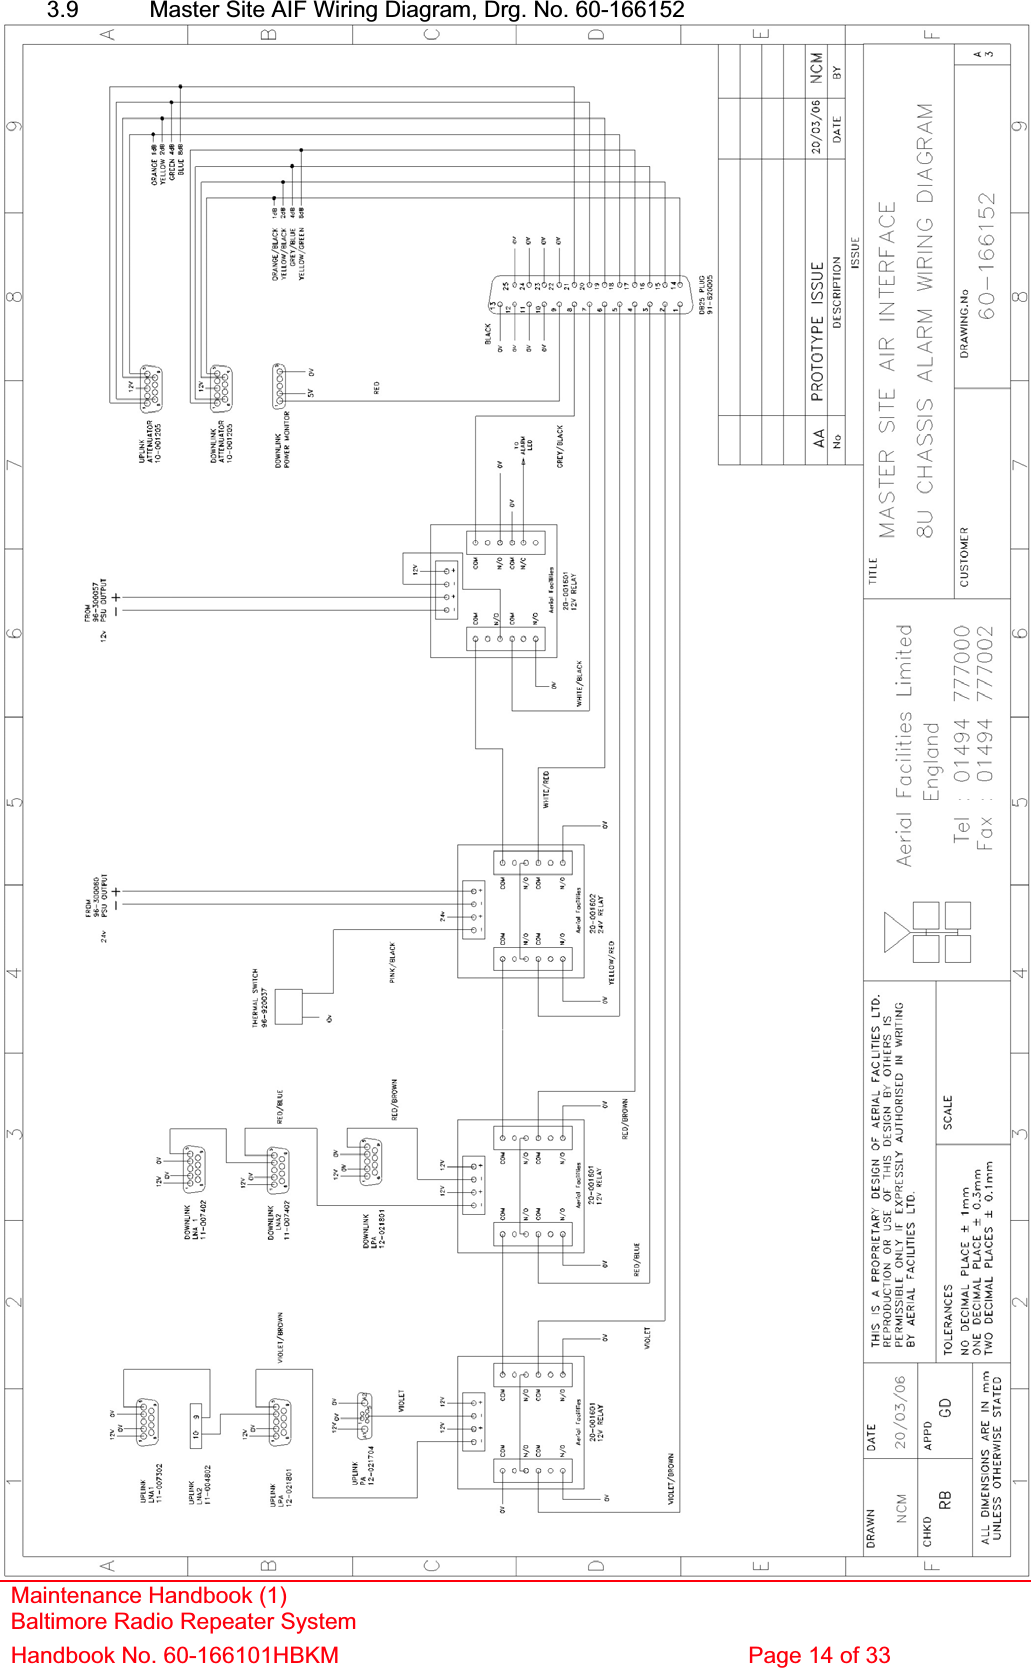 3.9  Master Site AIF Wiring Diagram, Drg. No. 60-166152 Maintenance Handbook (1) Baltimore Radio Repeater System Handbook No. 60-166101HBKM  Page 14 of 33 